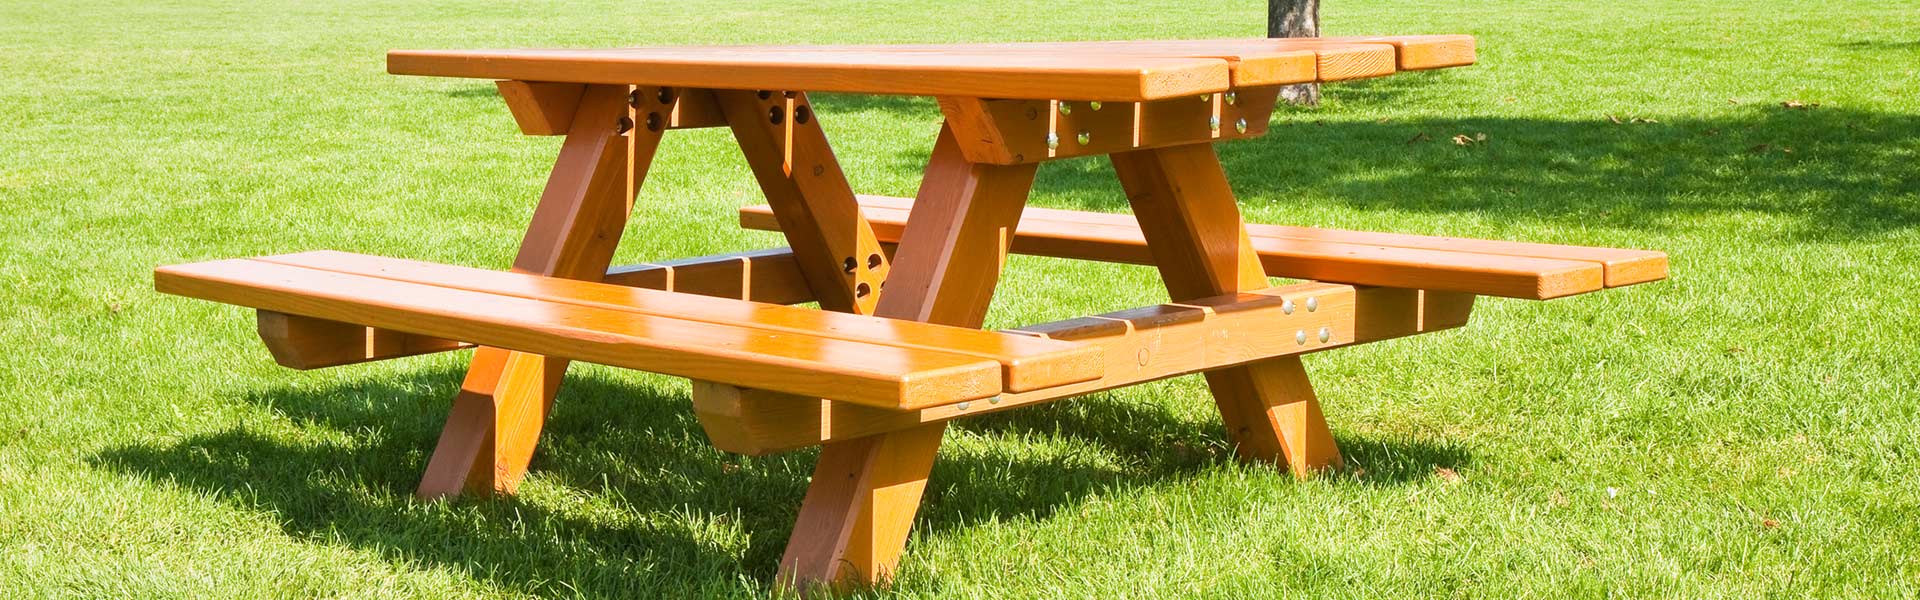 panther timber hardware picnic table